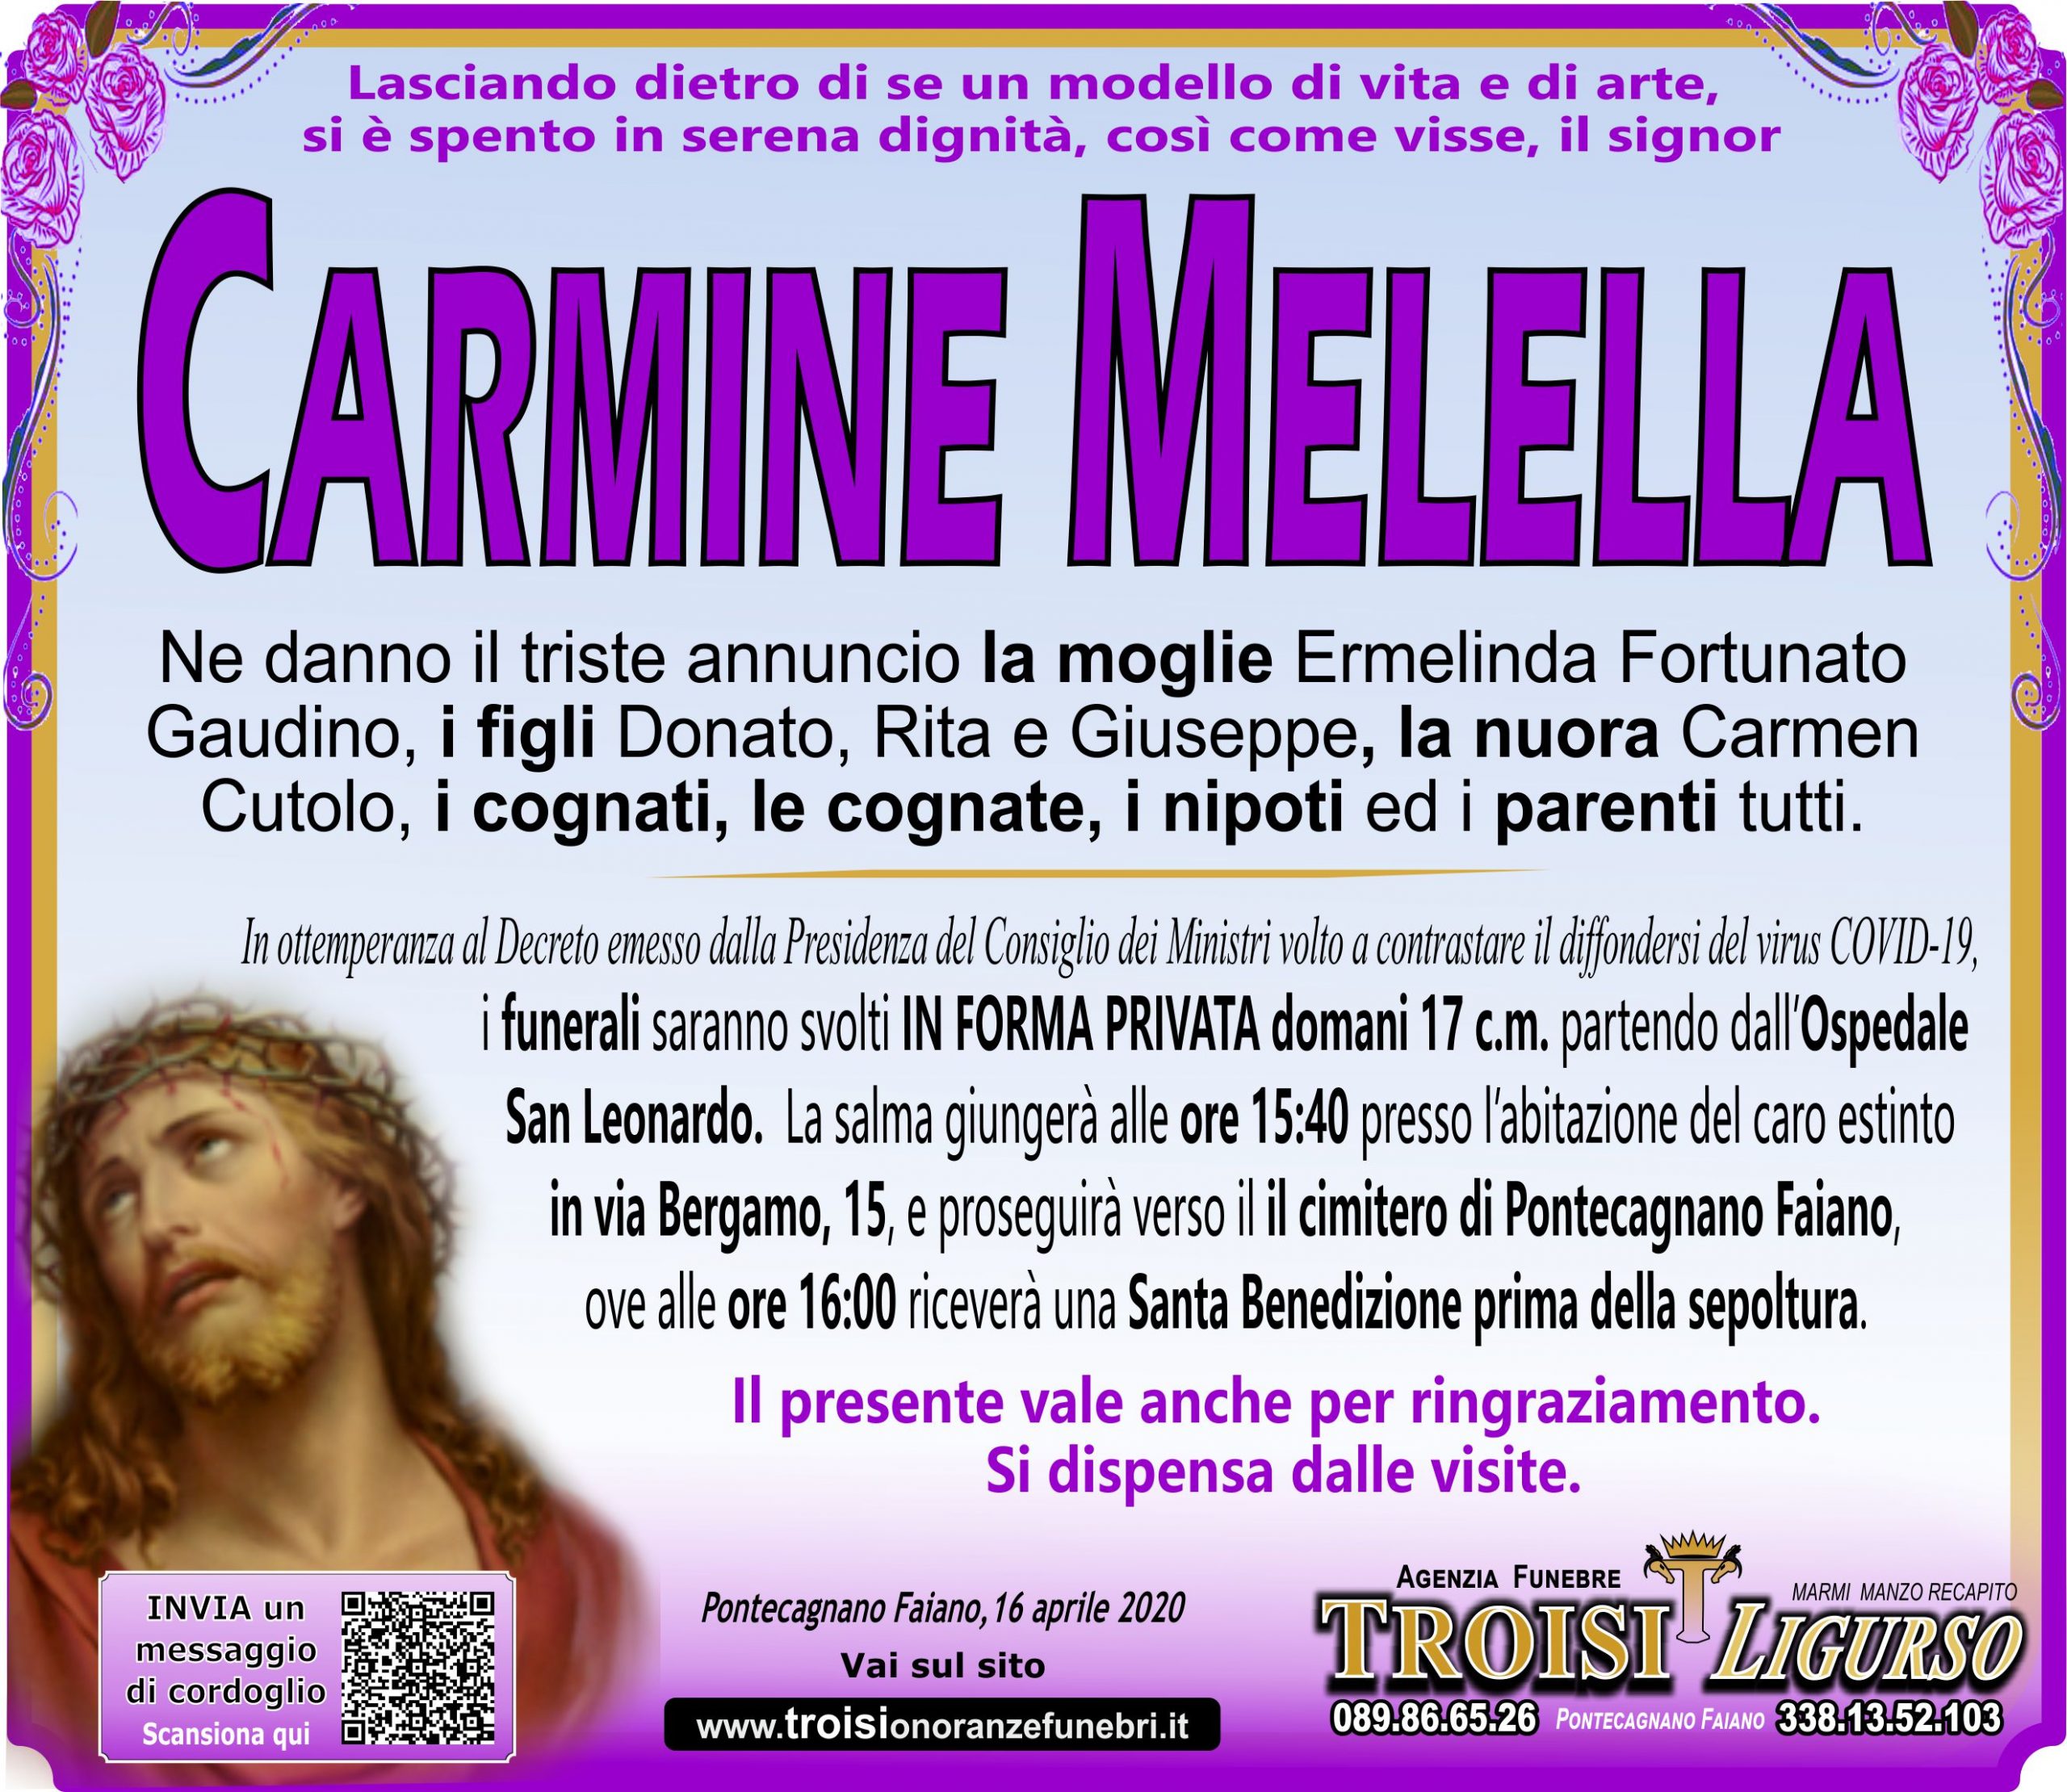 CARMINE MELELLA